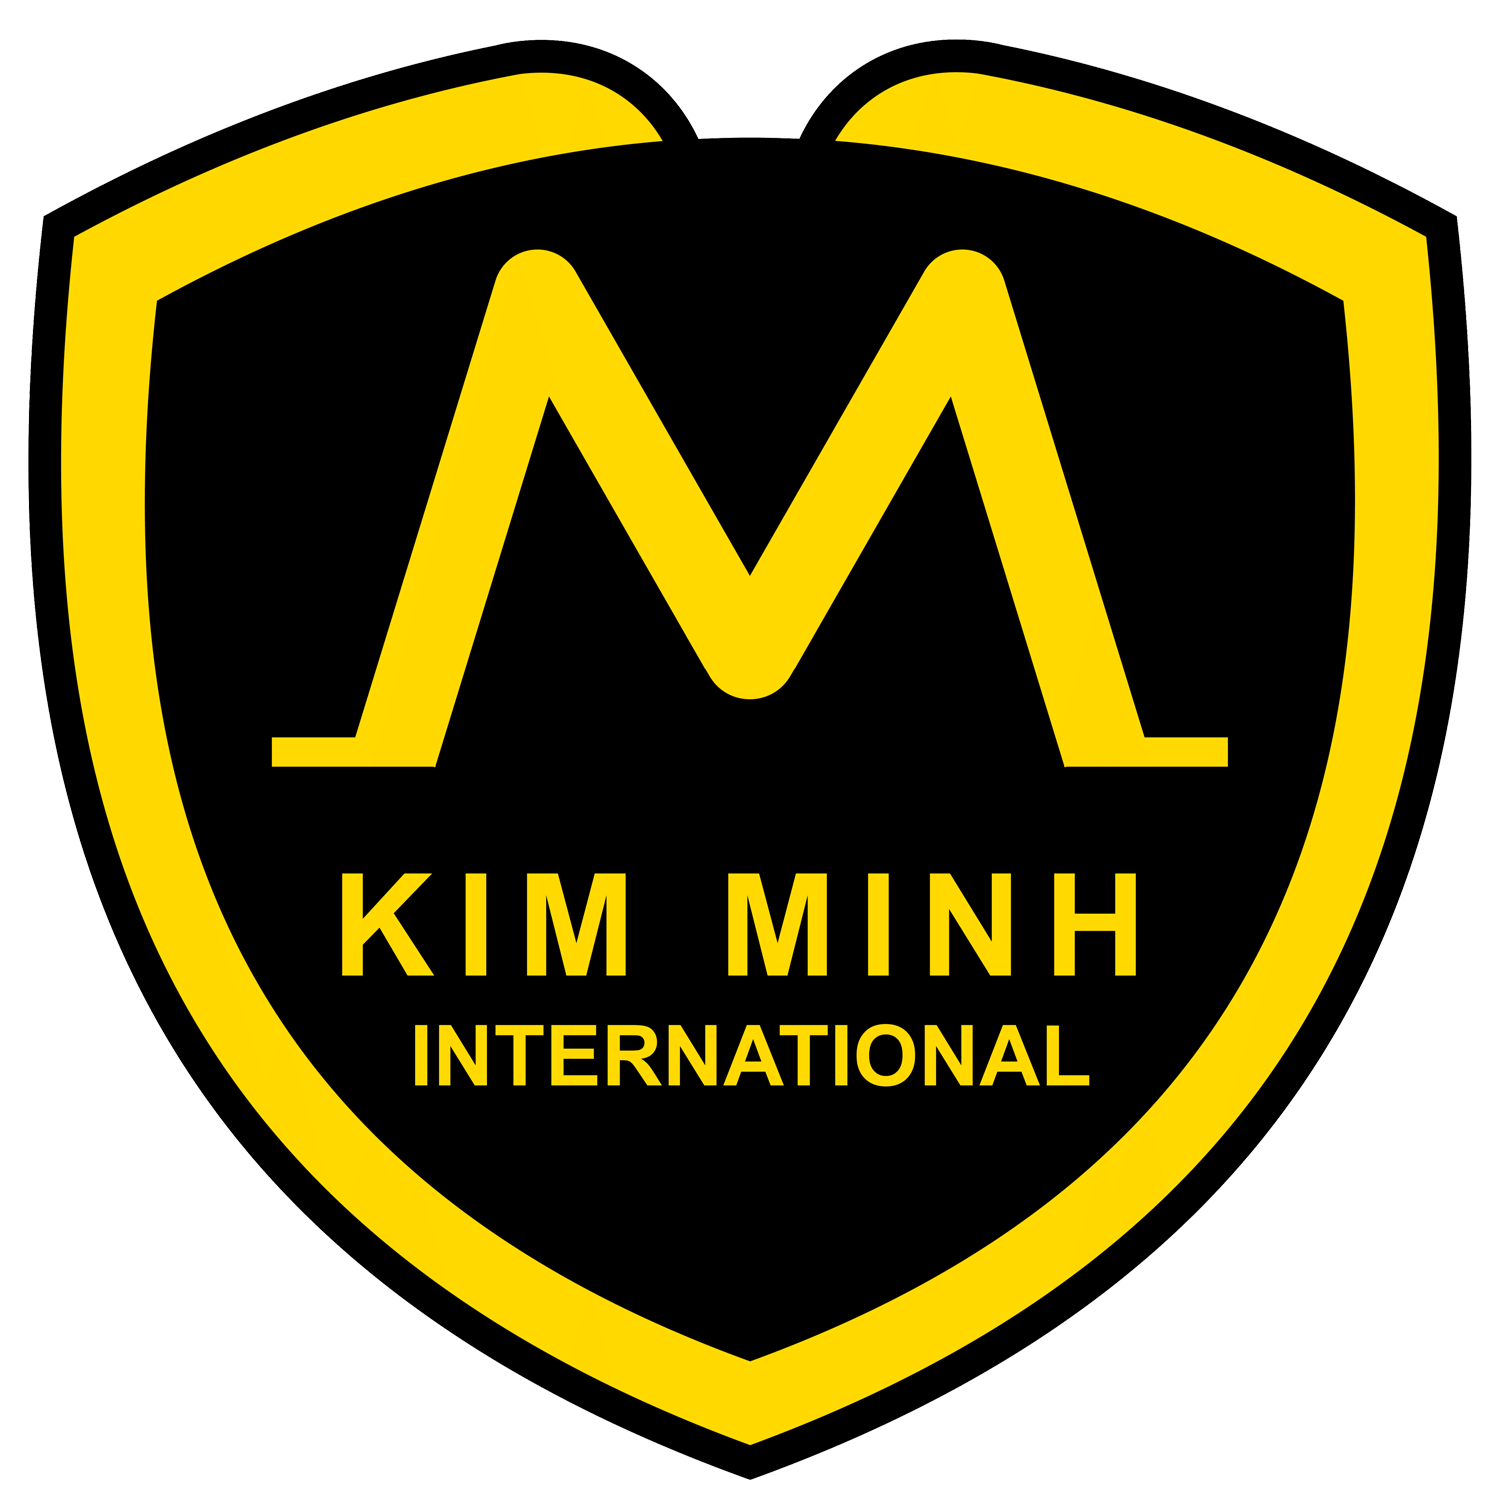 Kim Minh International